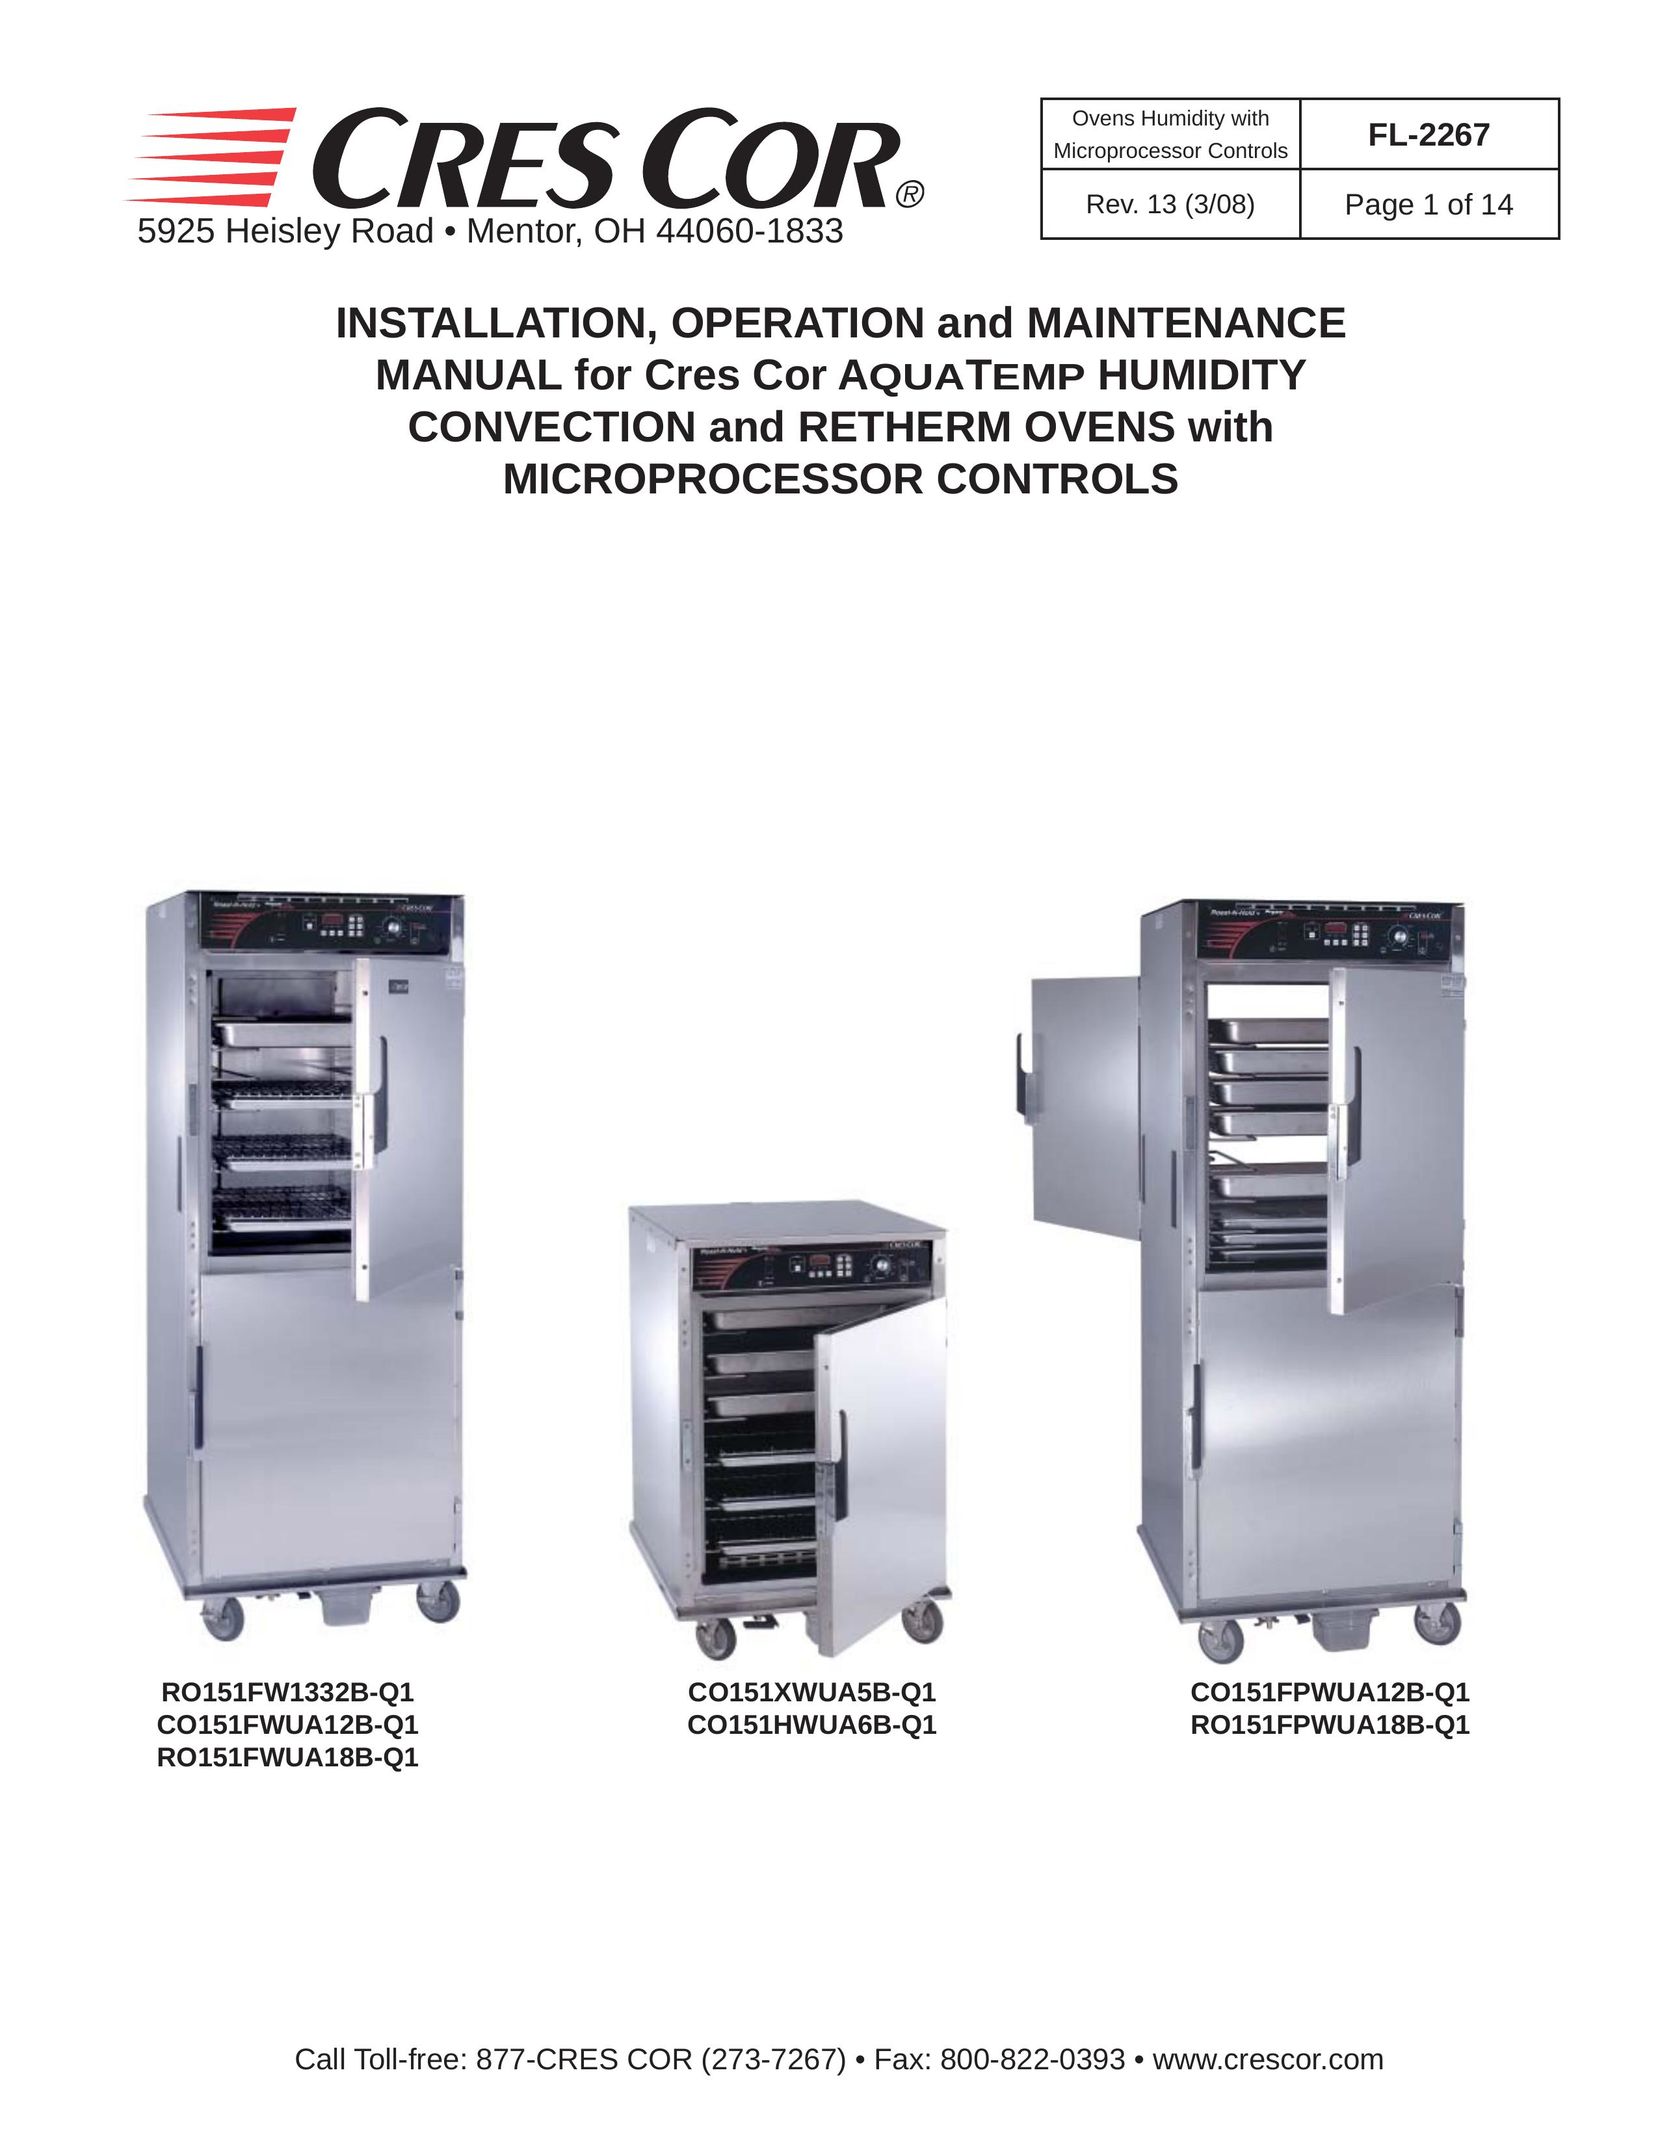 Cres Cor RO151FPWUA18B-Q1 Convection Oven User Manual